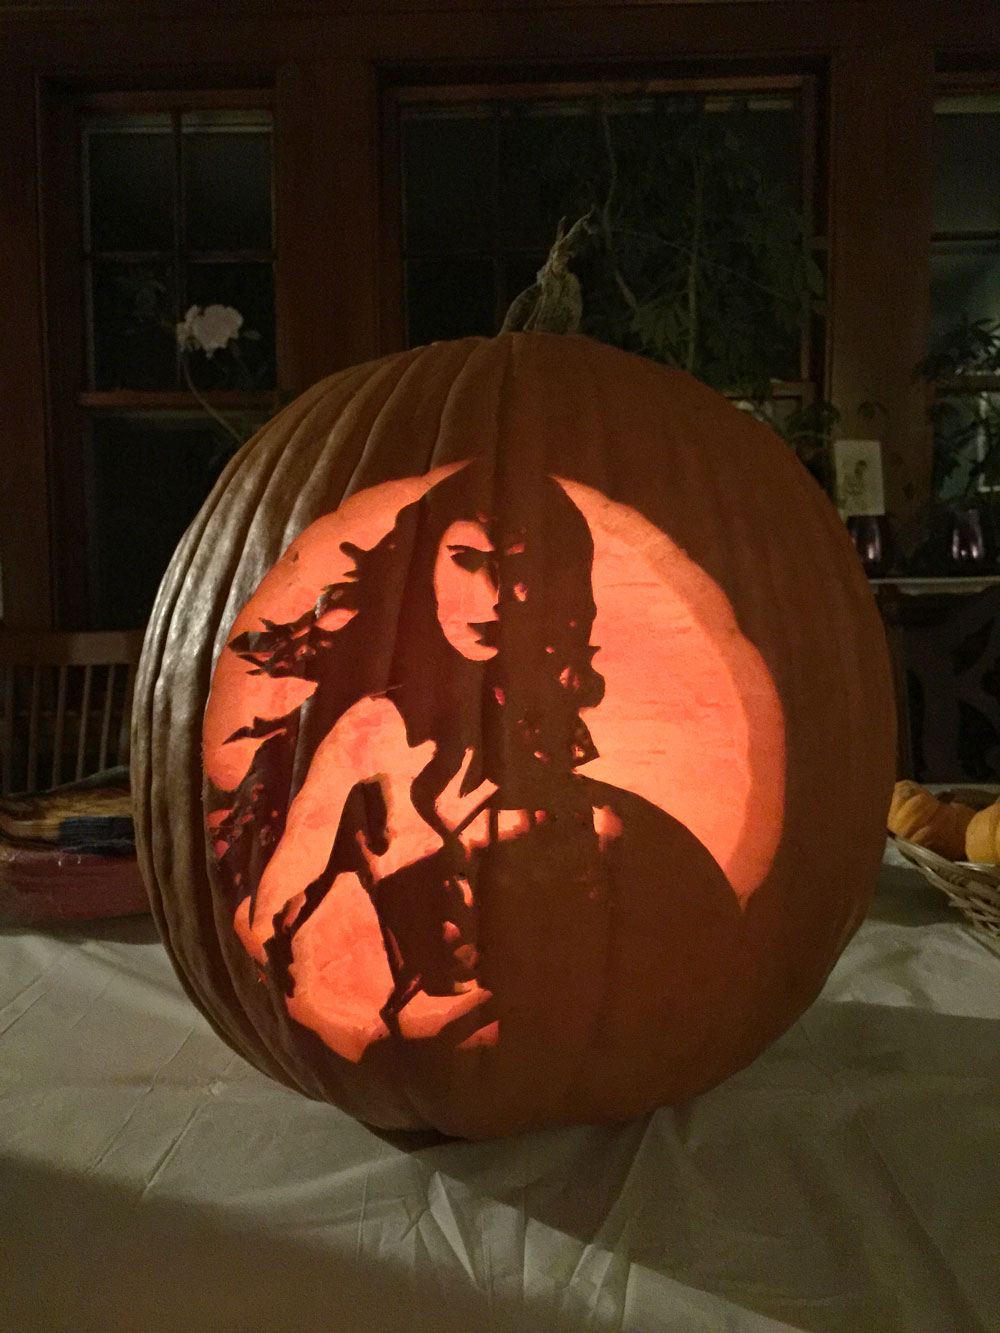 Wonder Woman pumpkin carving template